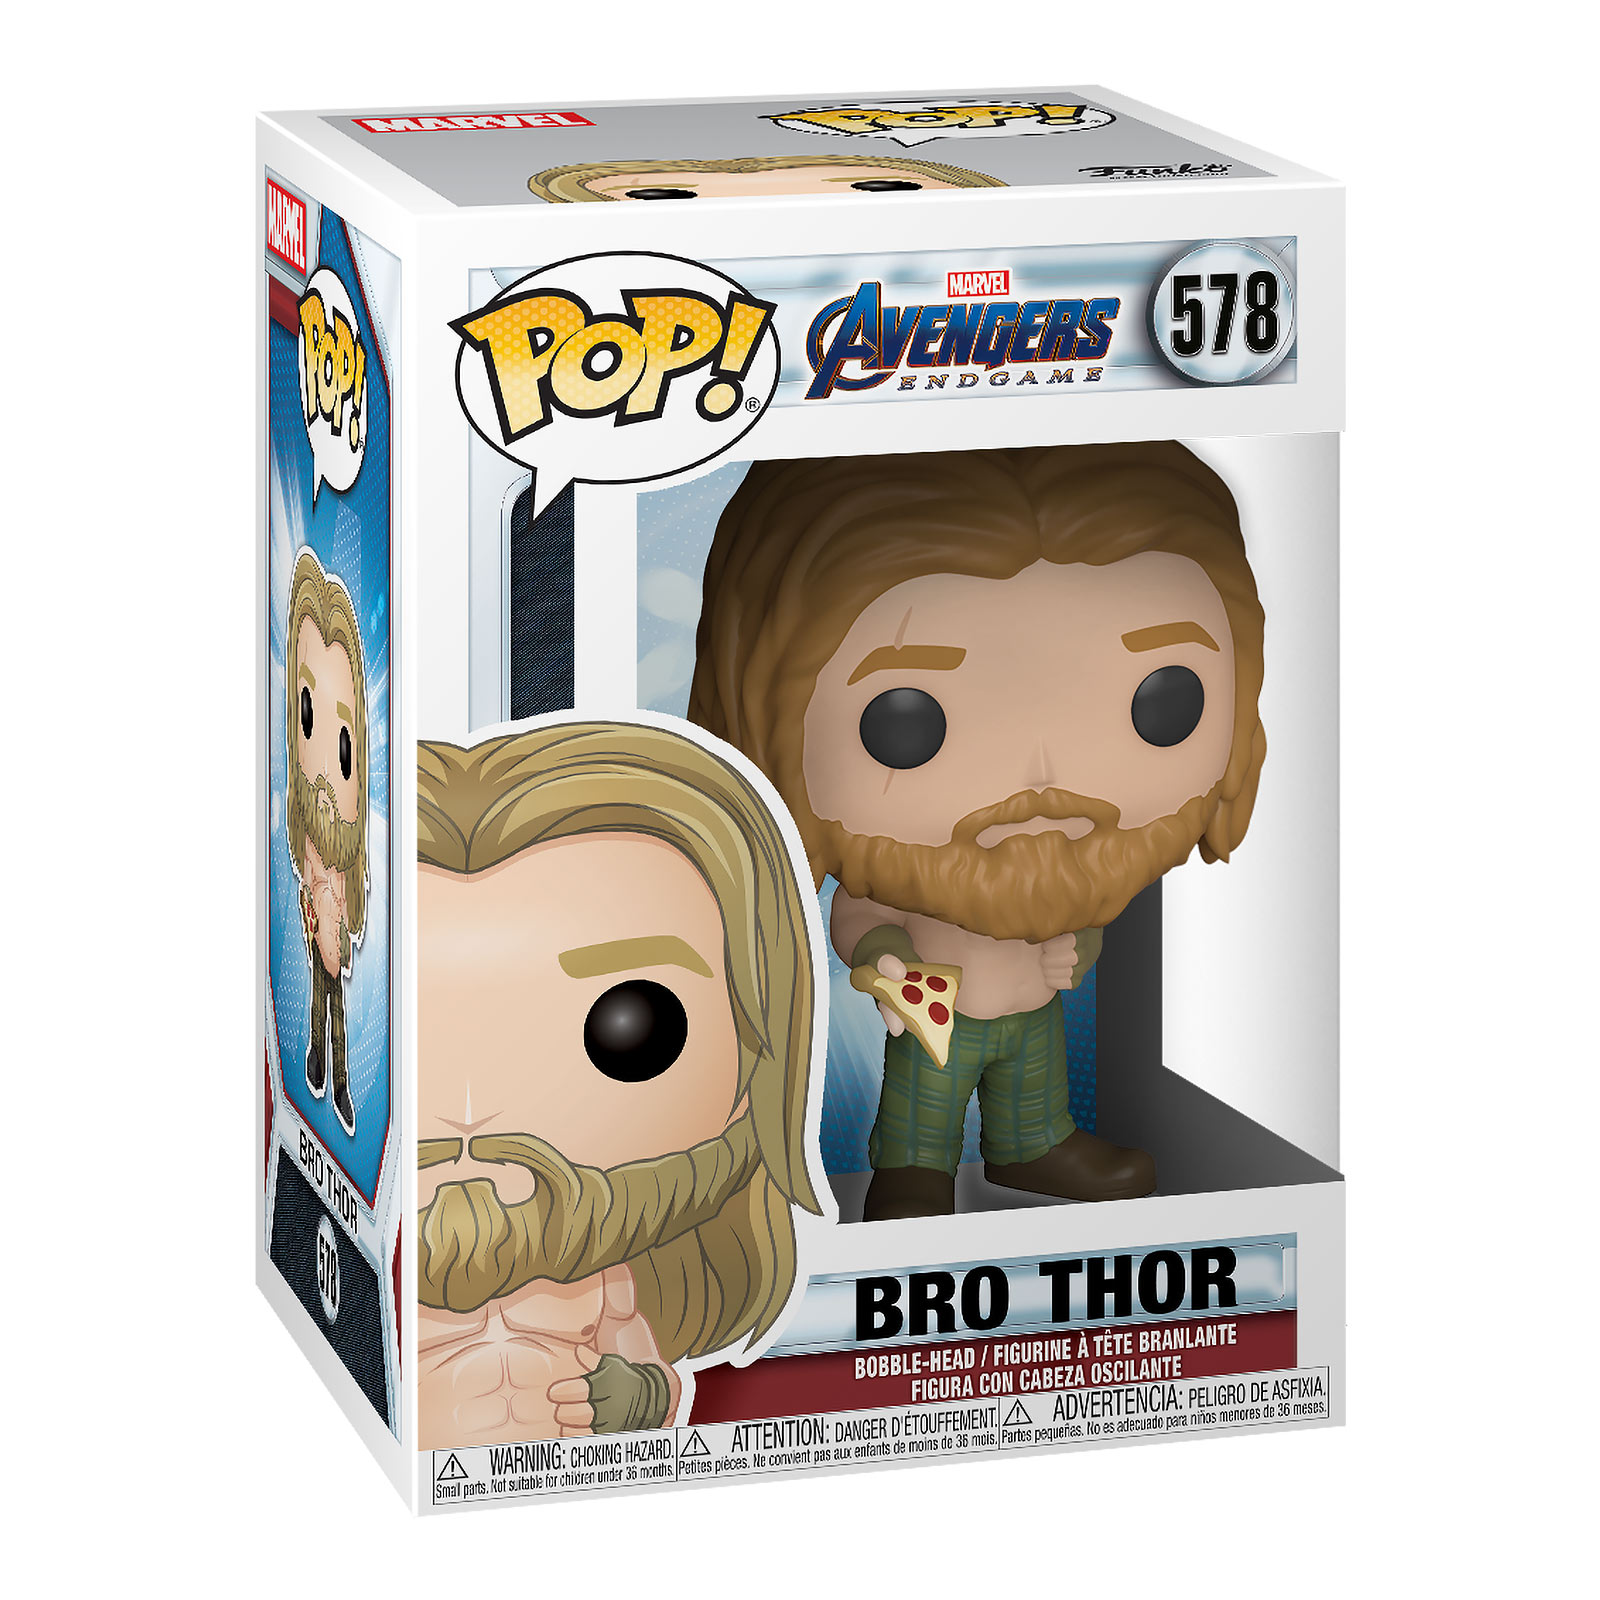 Avengers - Bro Thor mit Pizza Endgame Funko Pop Wackelkopf-Figur